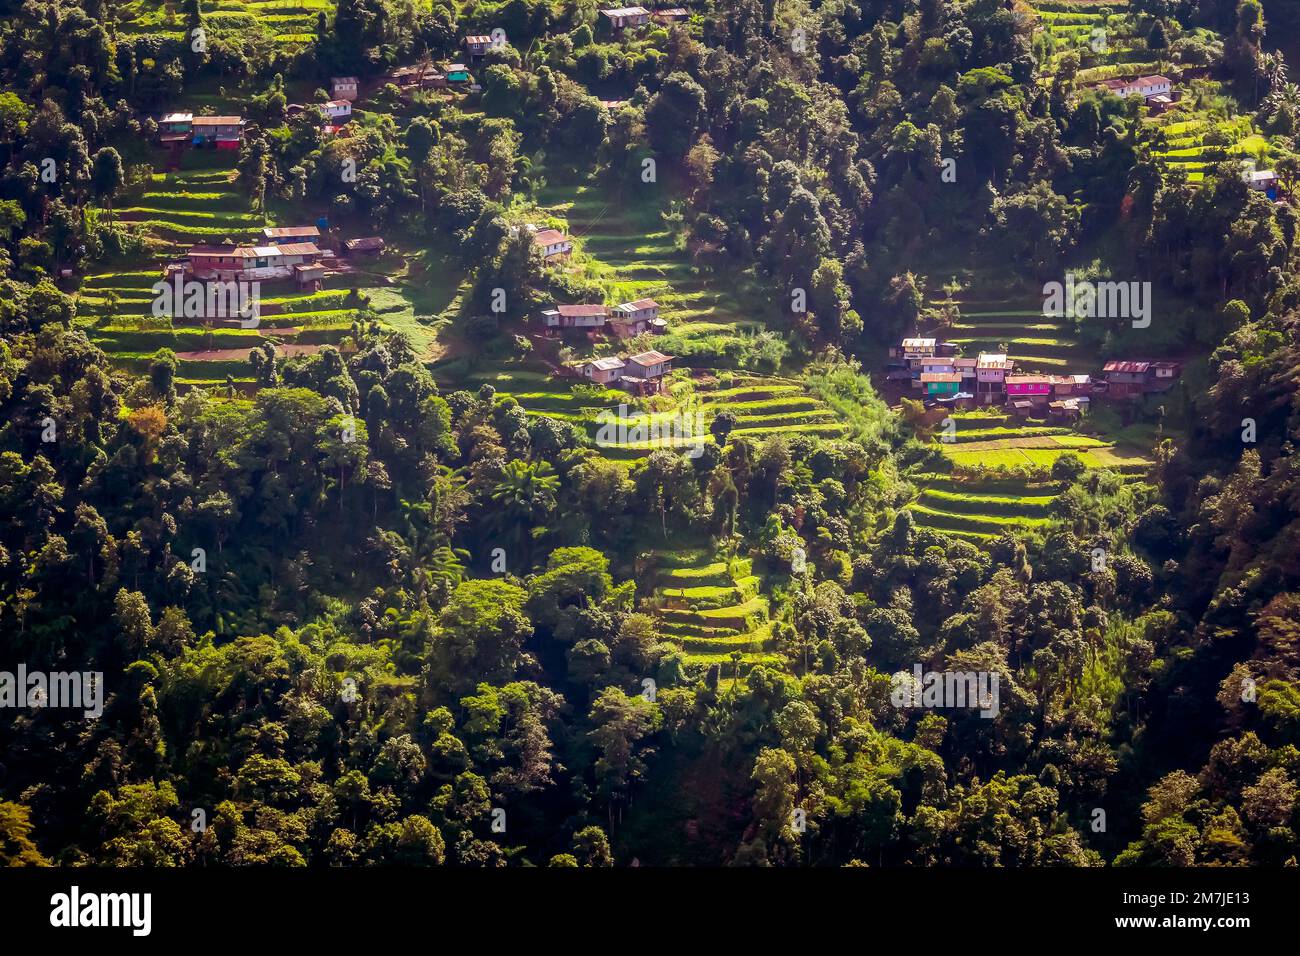 La plantation de thé, Darjeeling, Inde. Banque D'Images